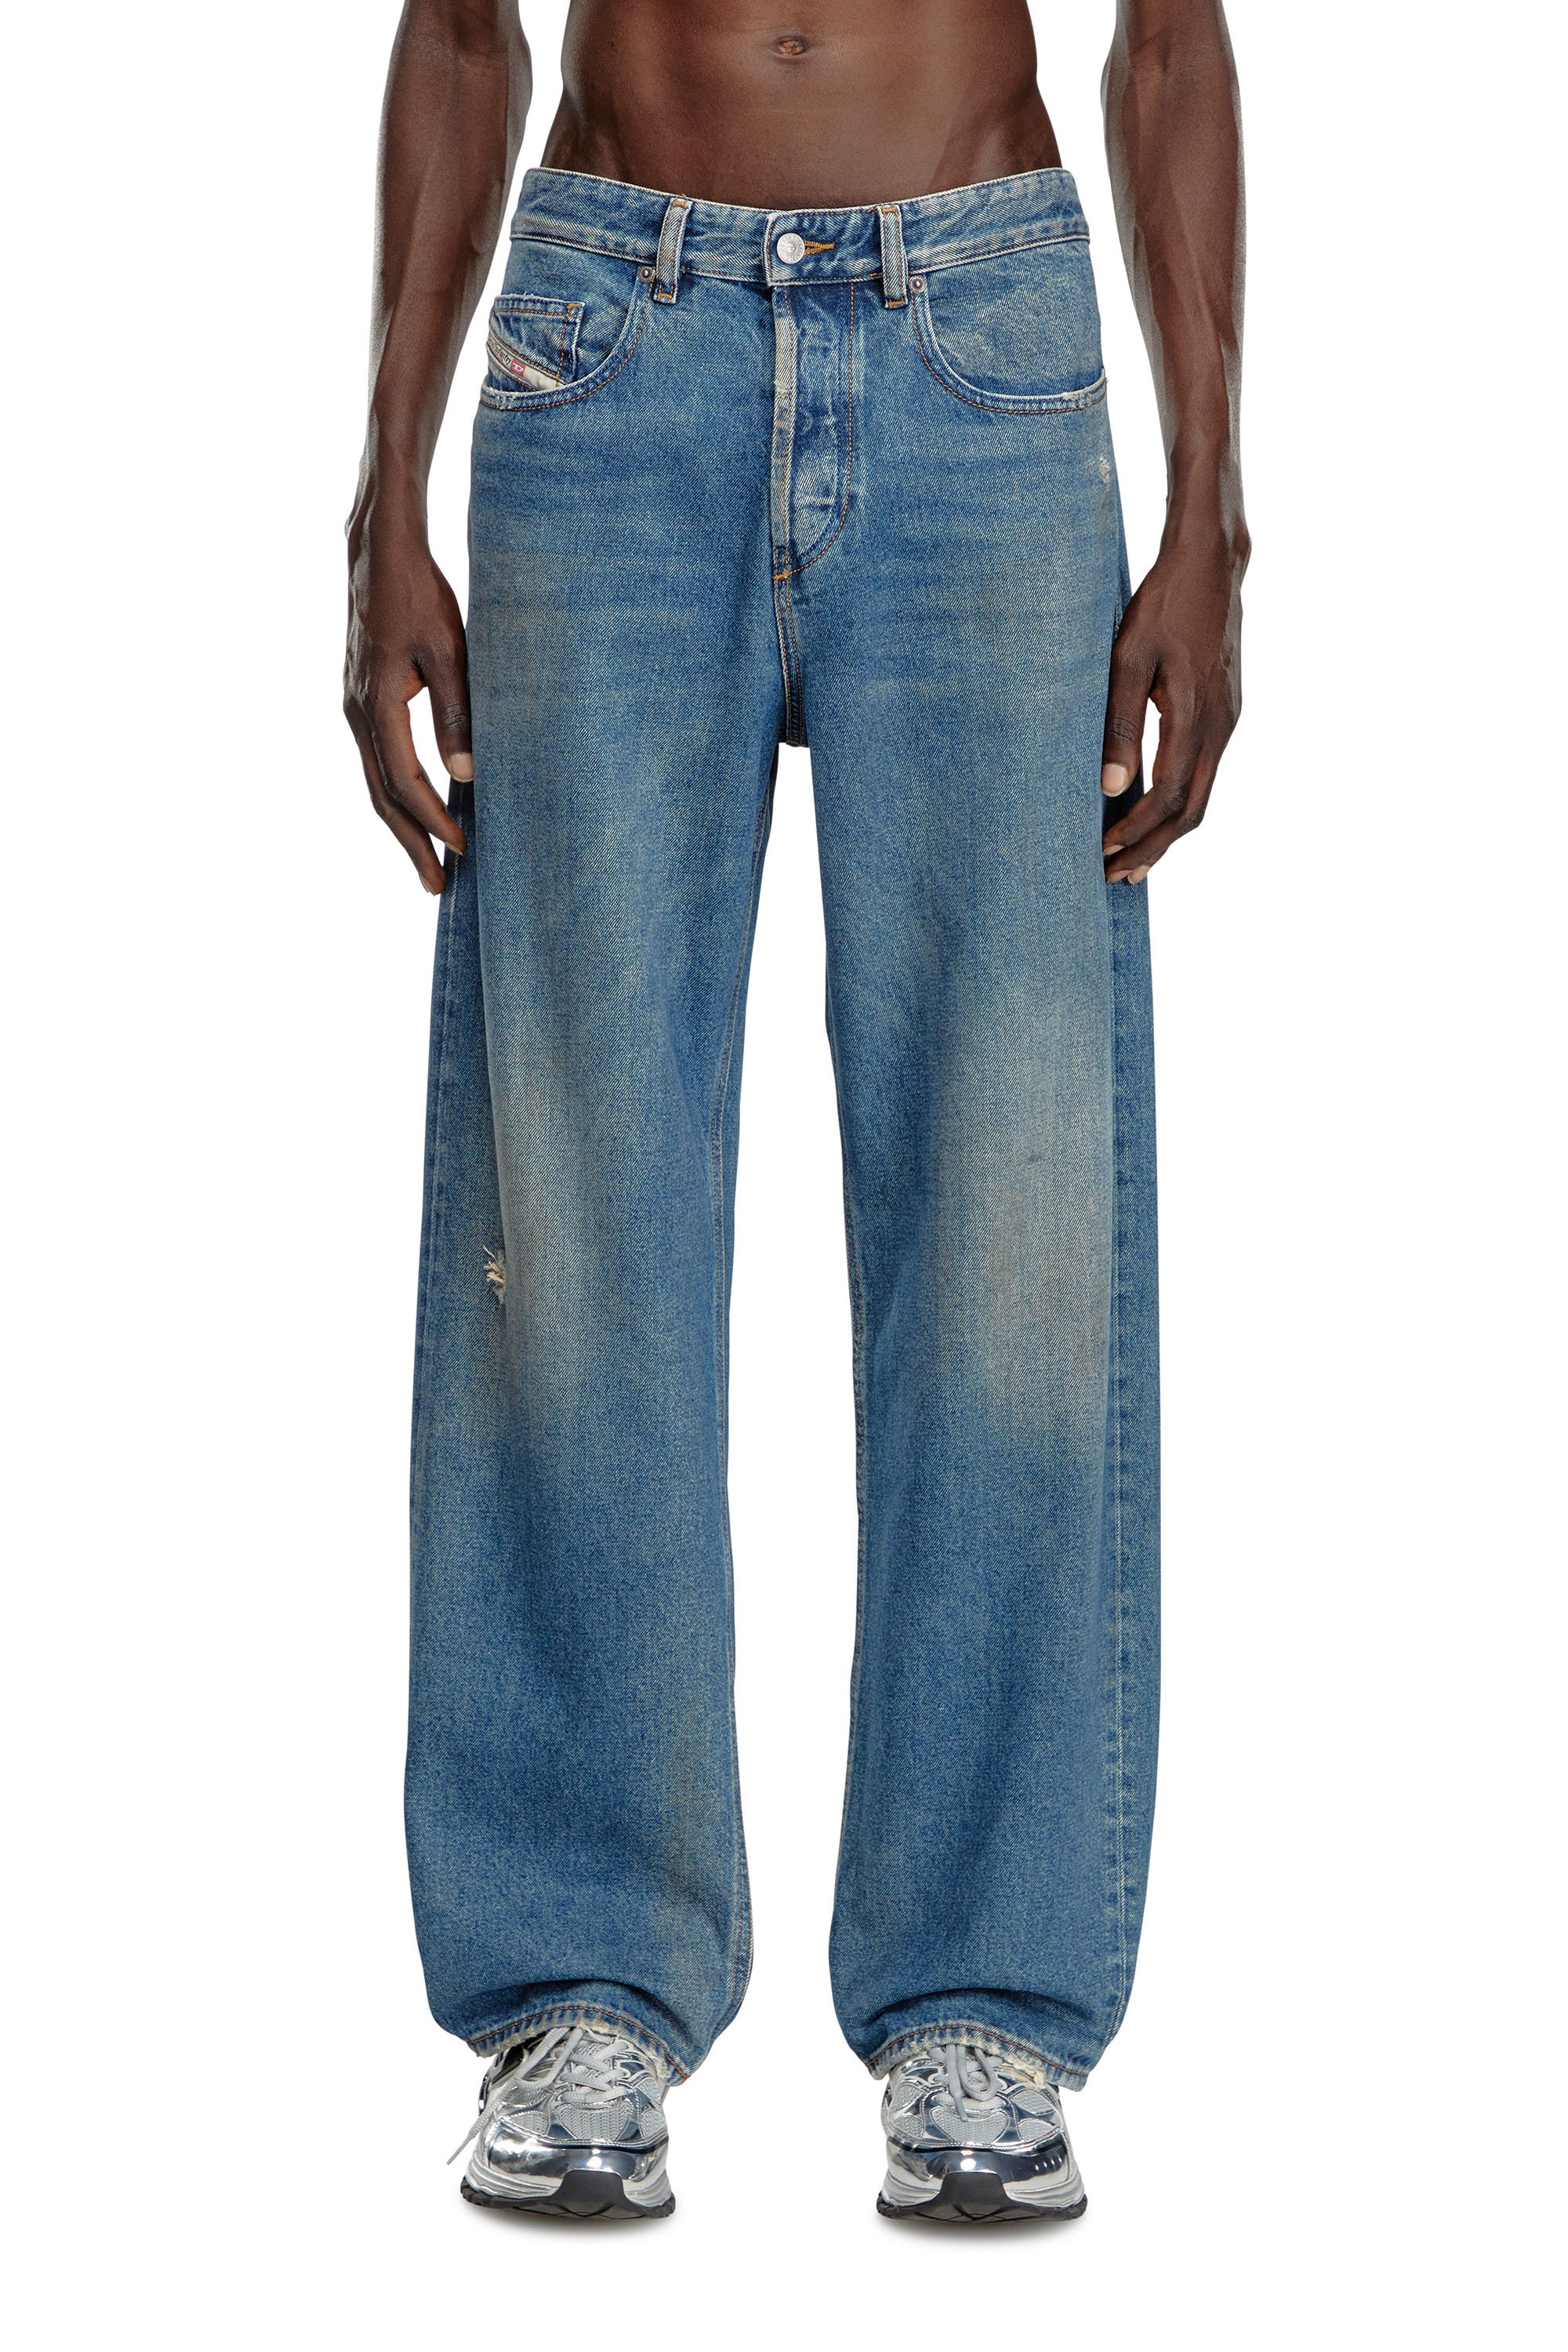 Diesel - Straight Jeans 2001 D-Macro 09J79, Hombre Straight Jeans - 2001 D-Macro in Azul marino - Image 2